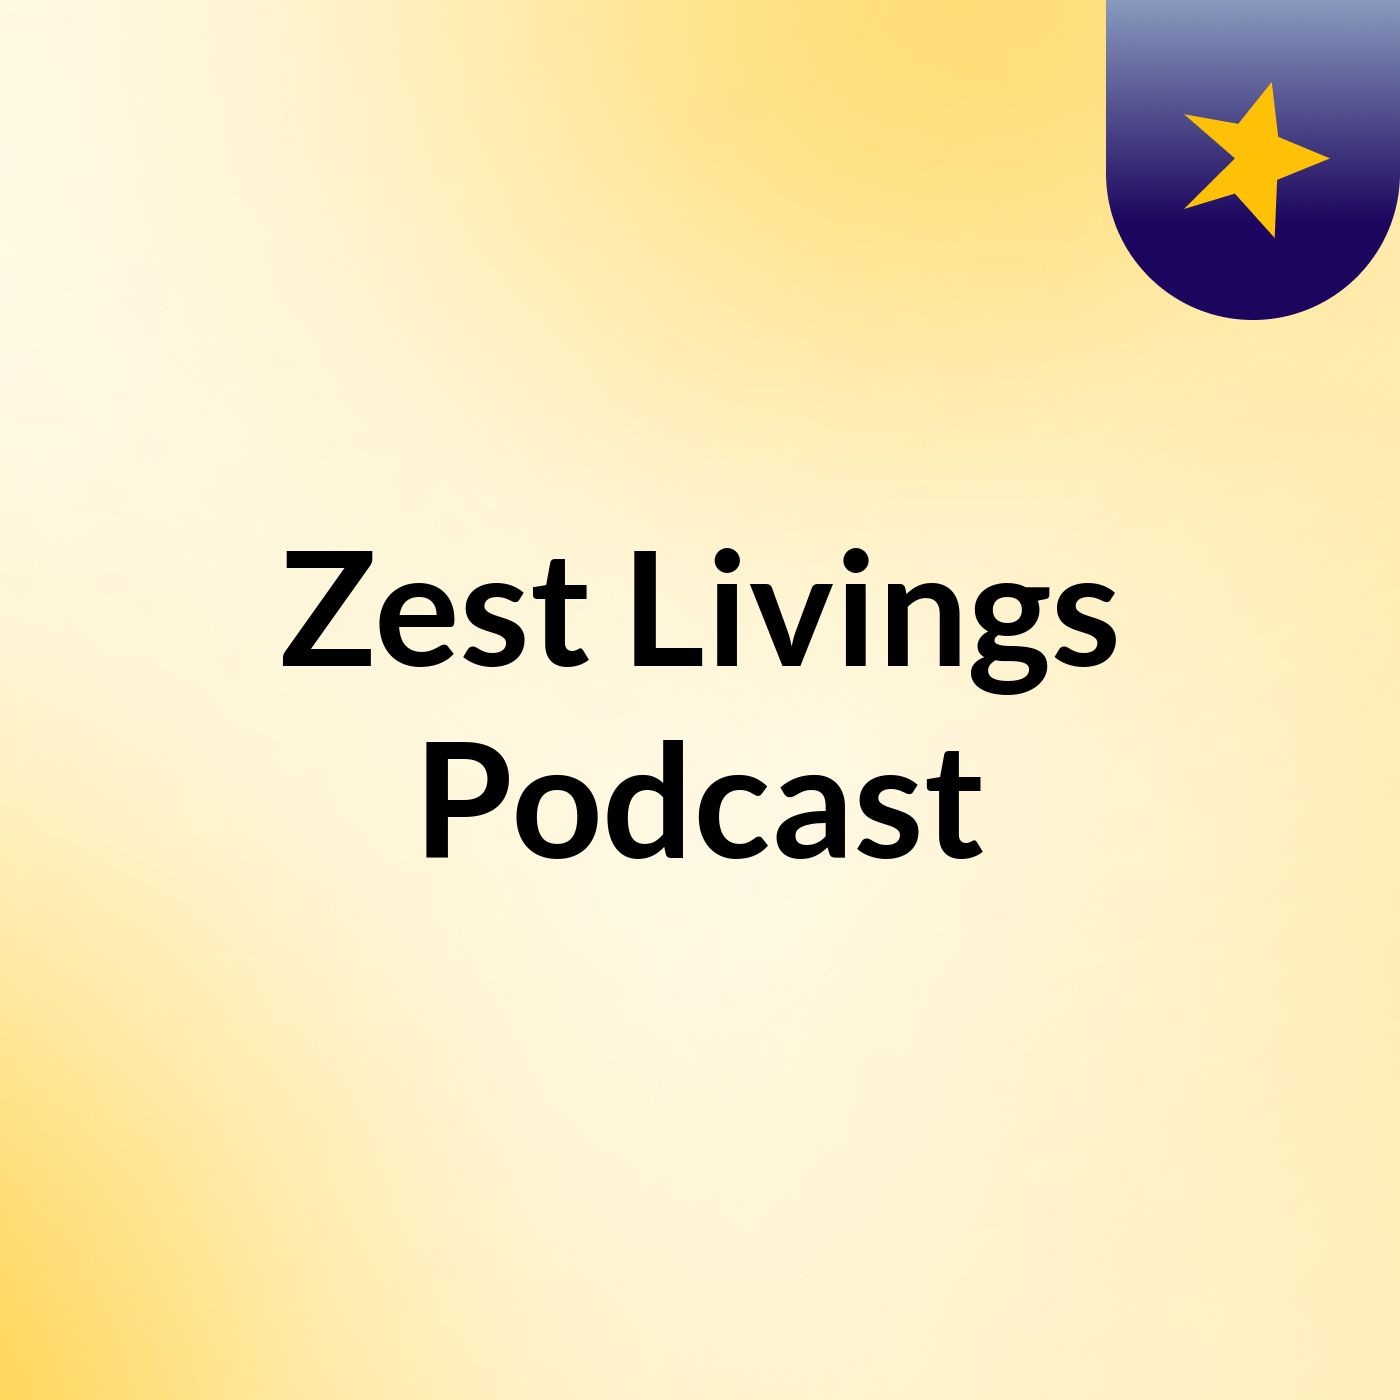 Zest Livings Podcast